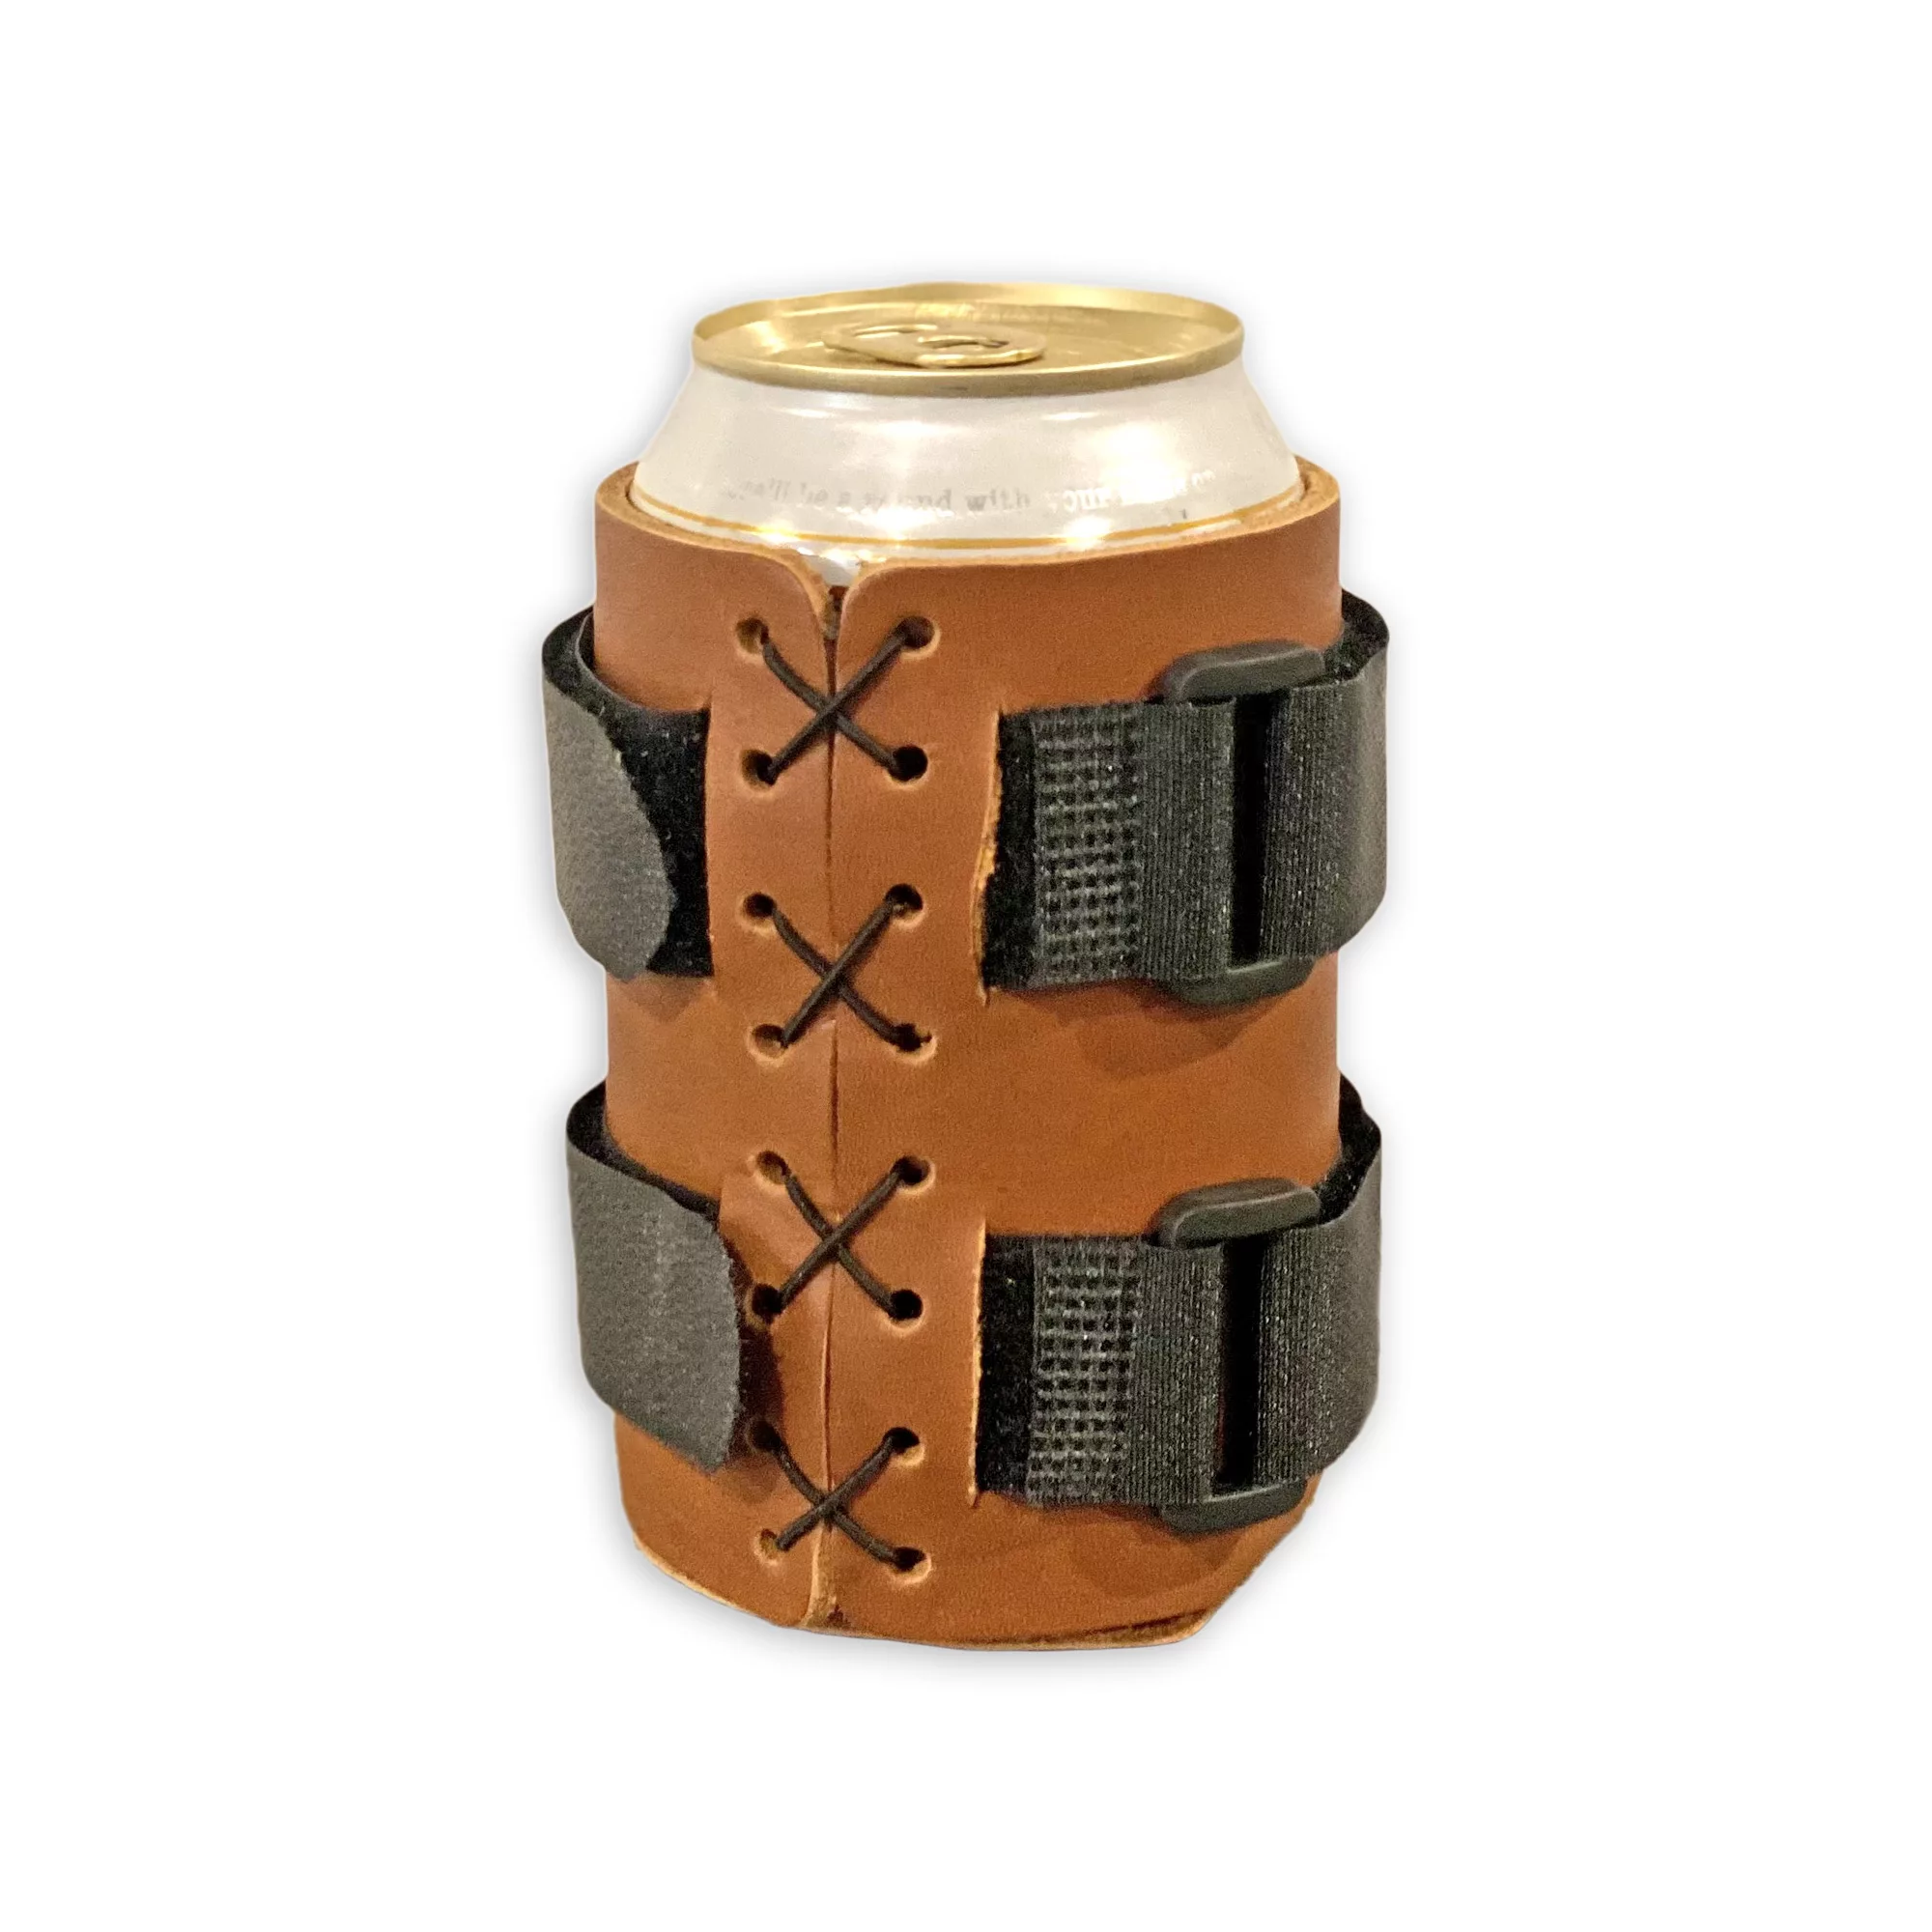 https://beerbinding.com/wp-content/uploads/2022/03/beer-binding-leather-edition-leather-ski-pole-beer-holder-jpg.webp